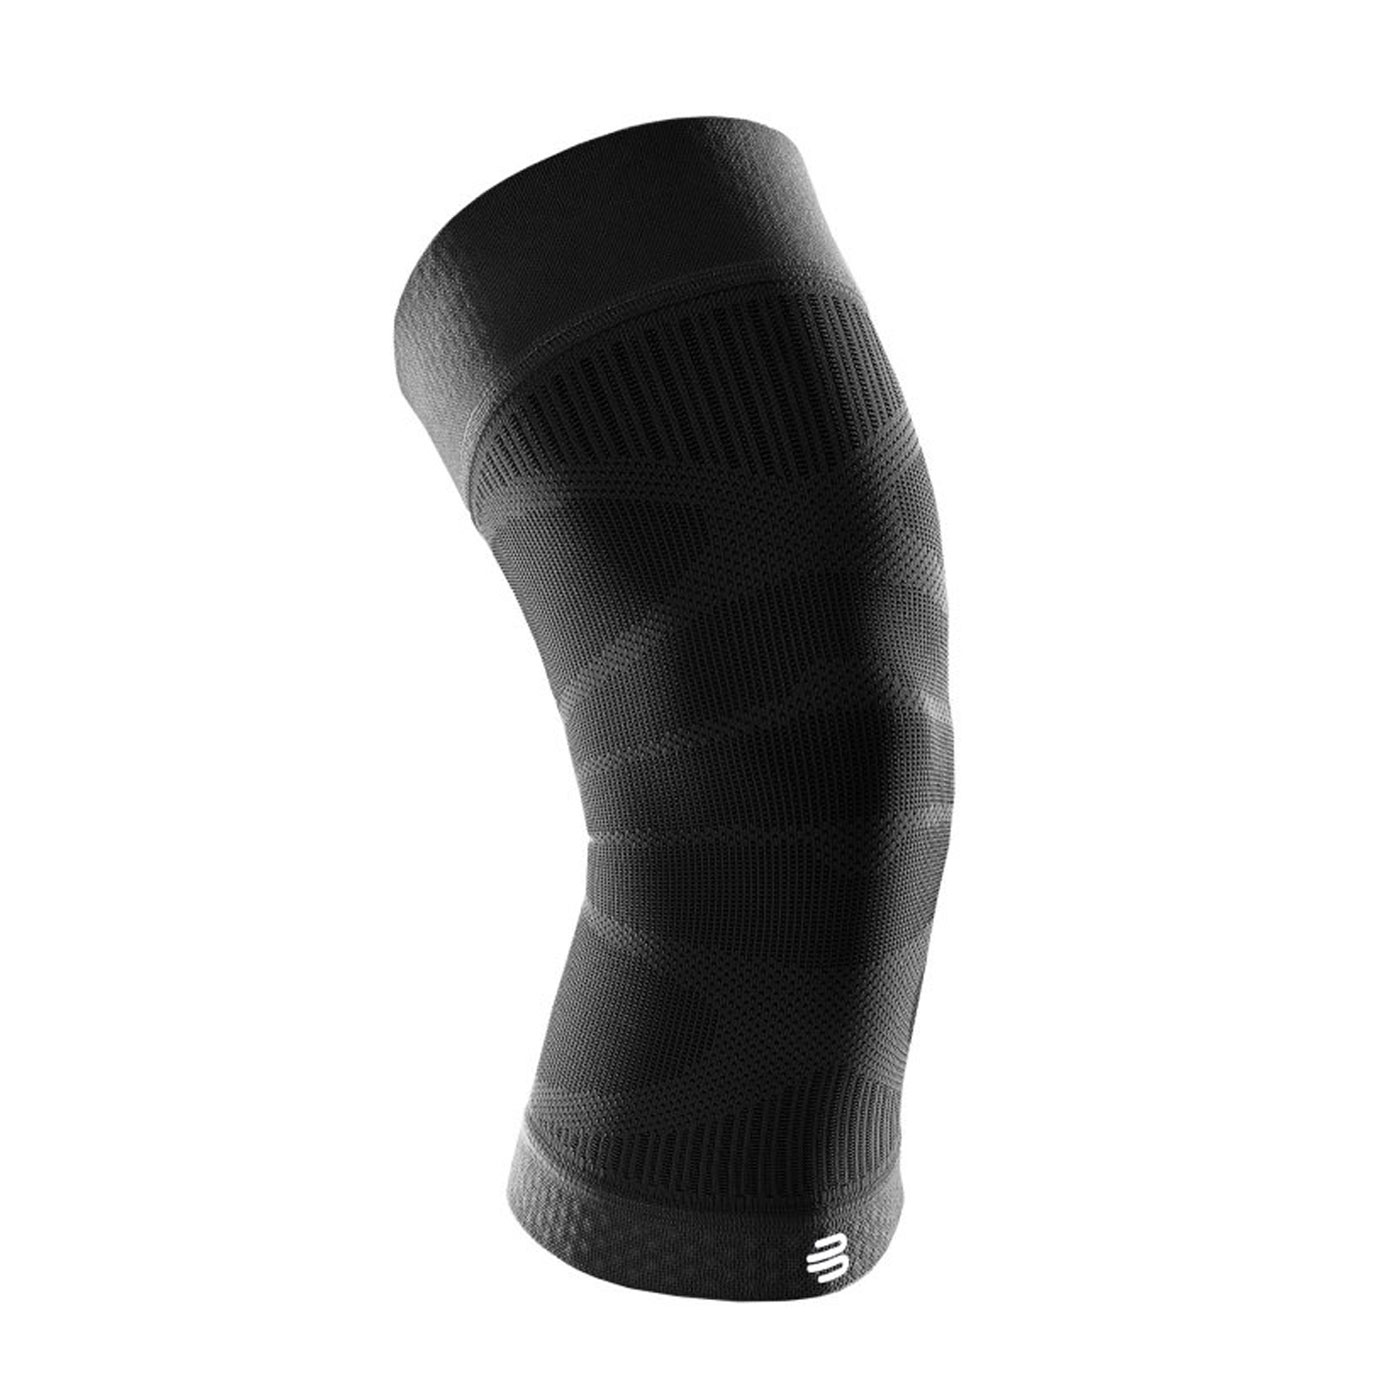 BAUERFEIND保爾範 專業運動壓縮護膝束套 70000355 - 黑白